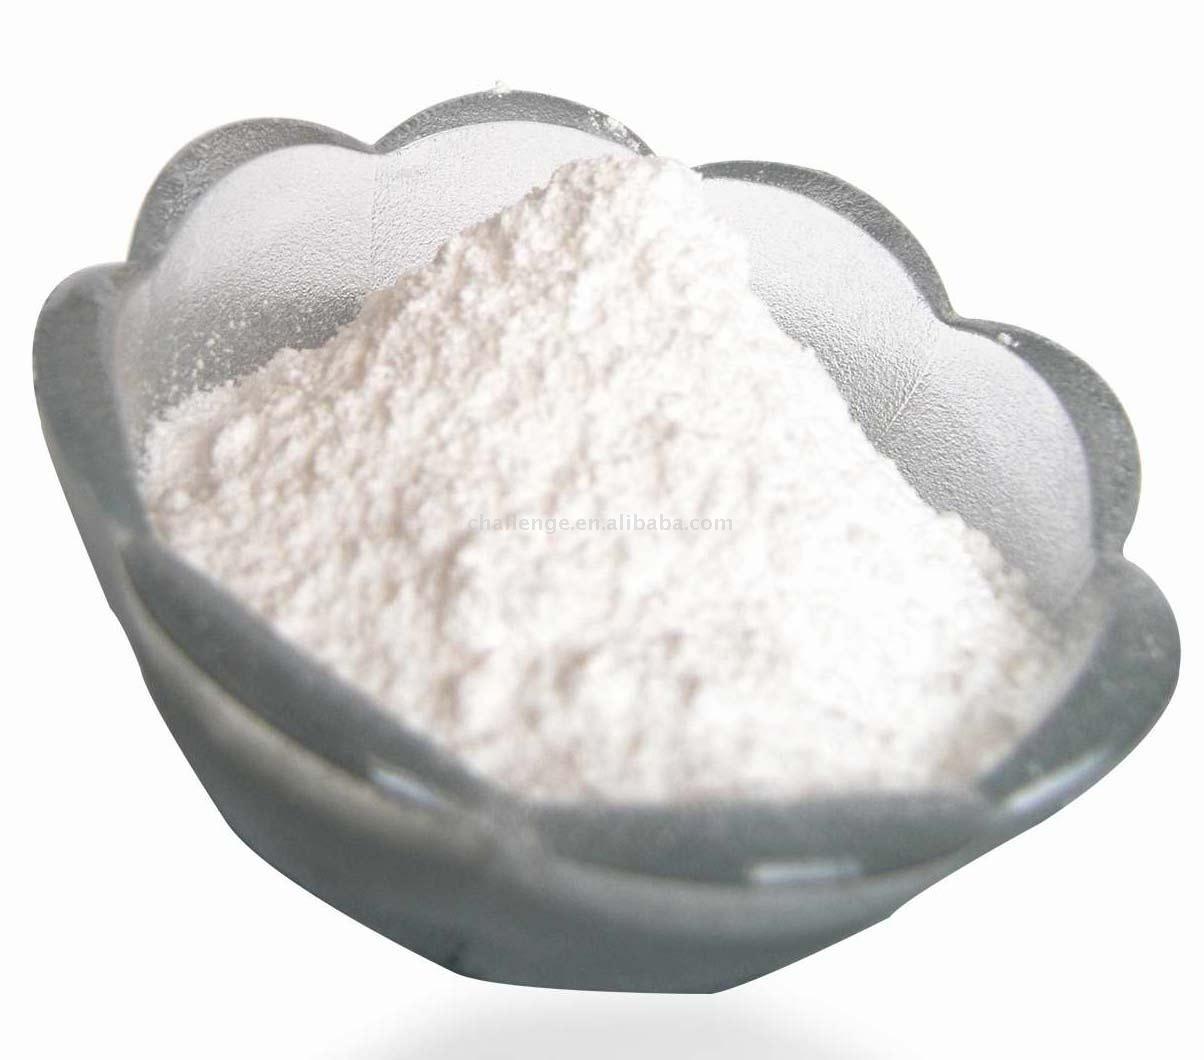  Sodium Butyrate (Butyrate de sodium)